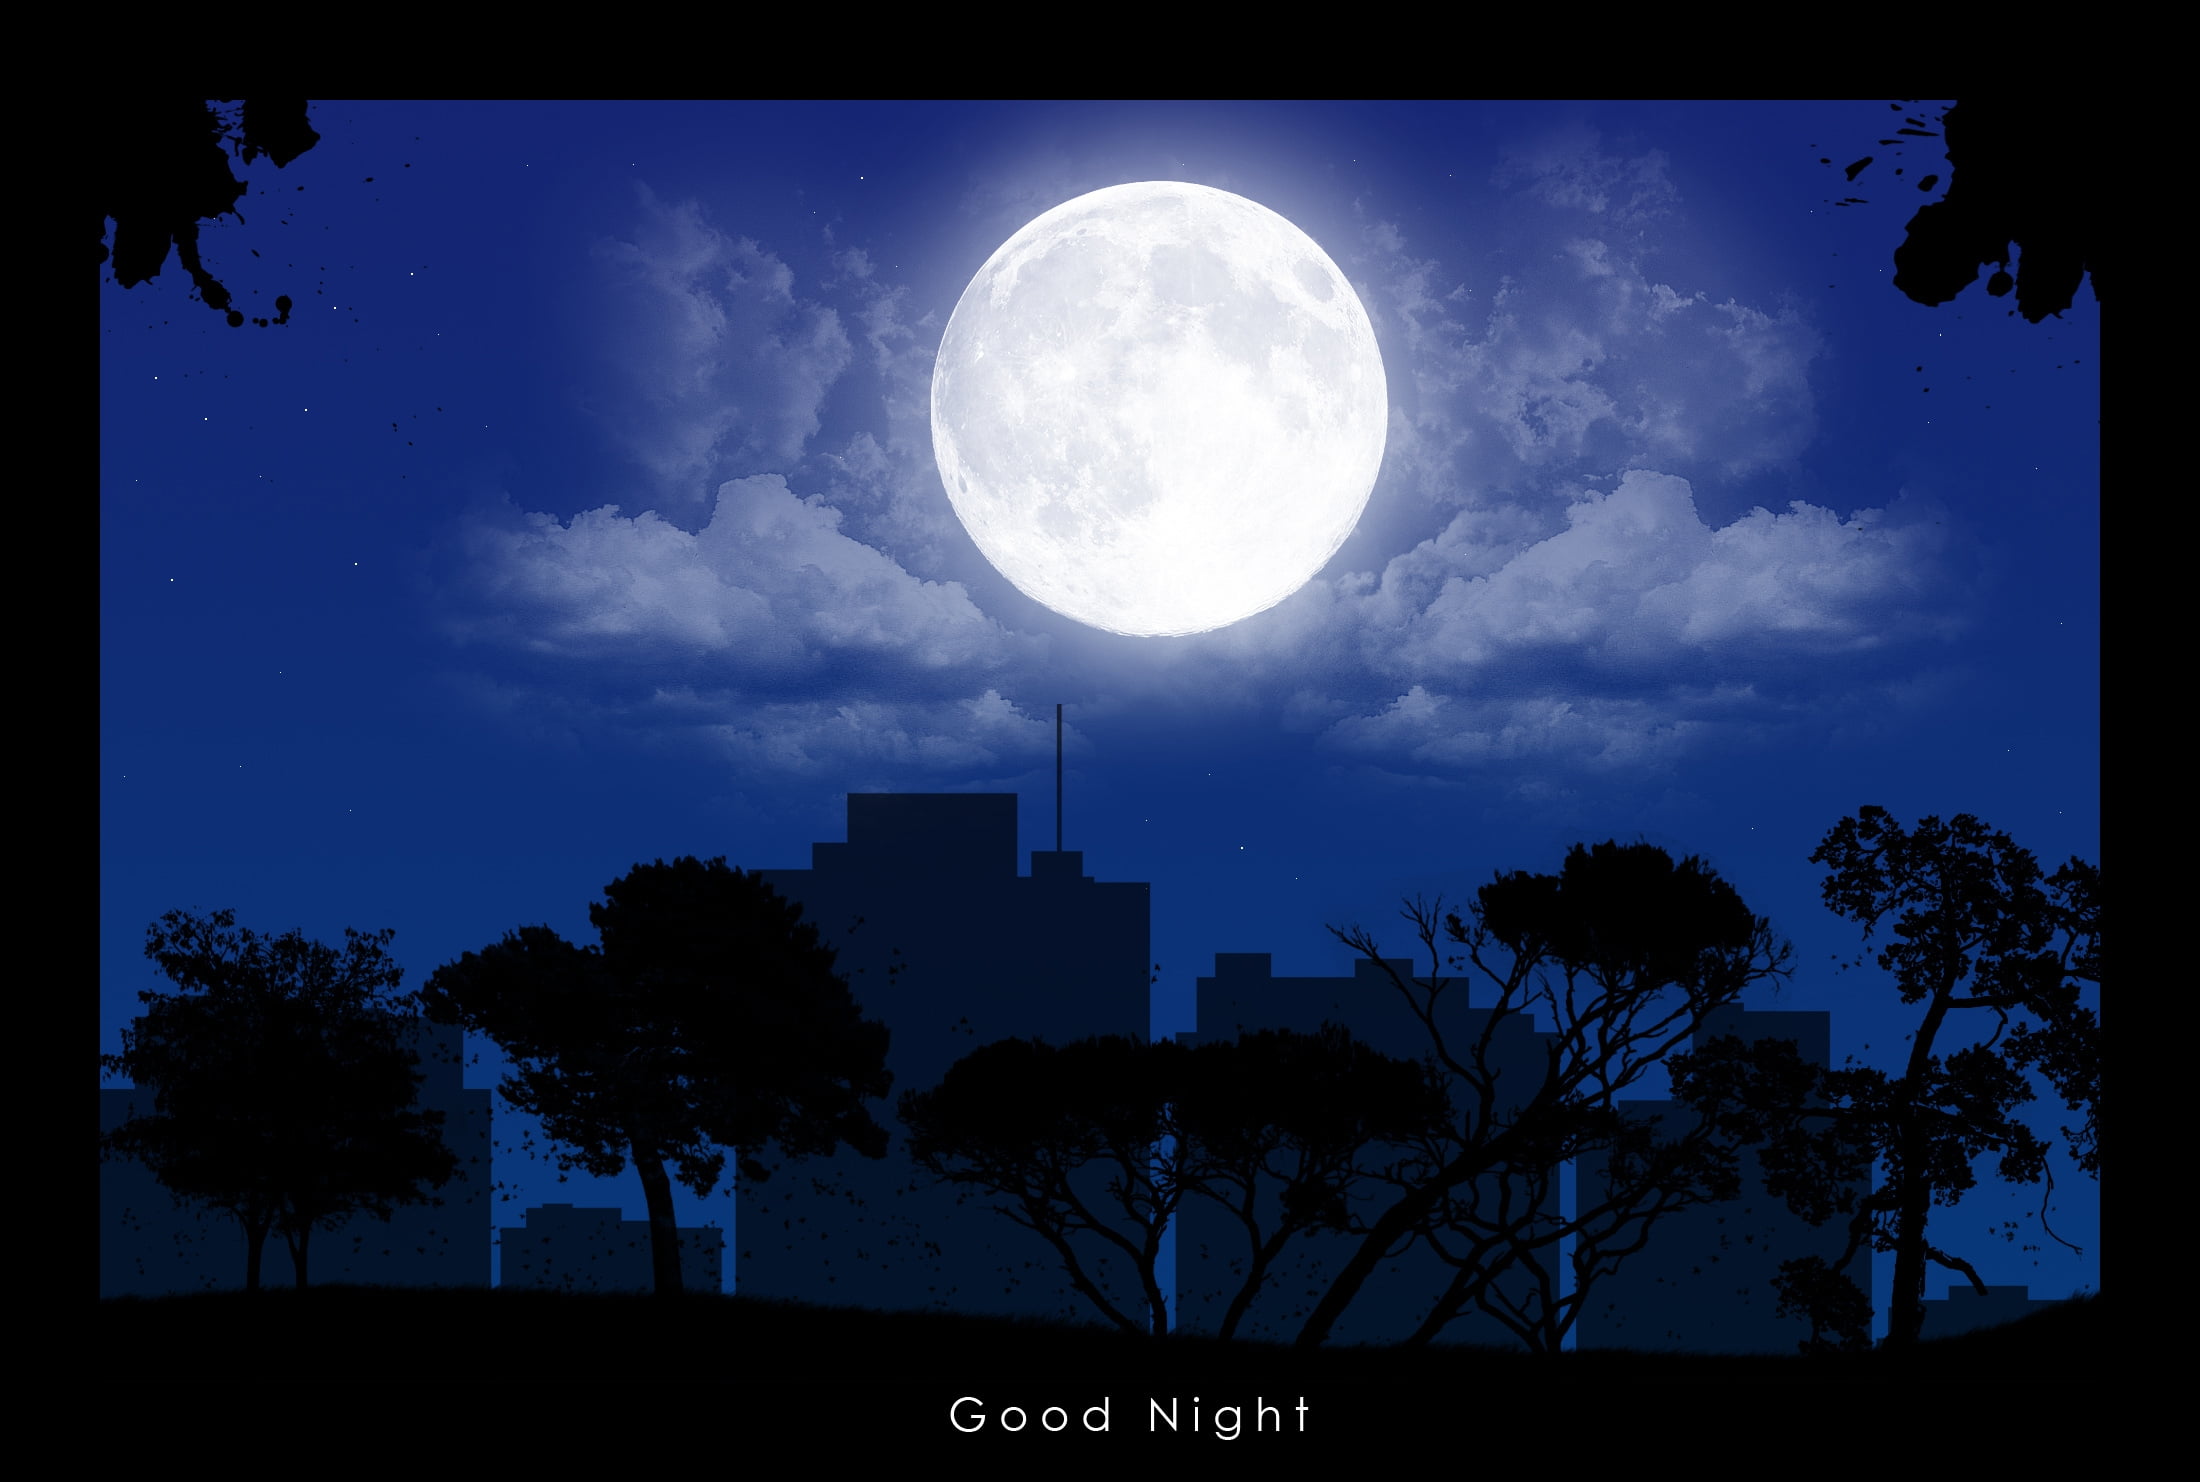 full moon with good night text overlay, city, buildings, shadows